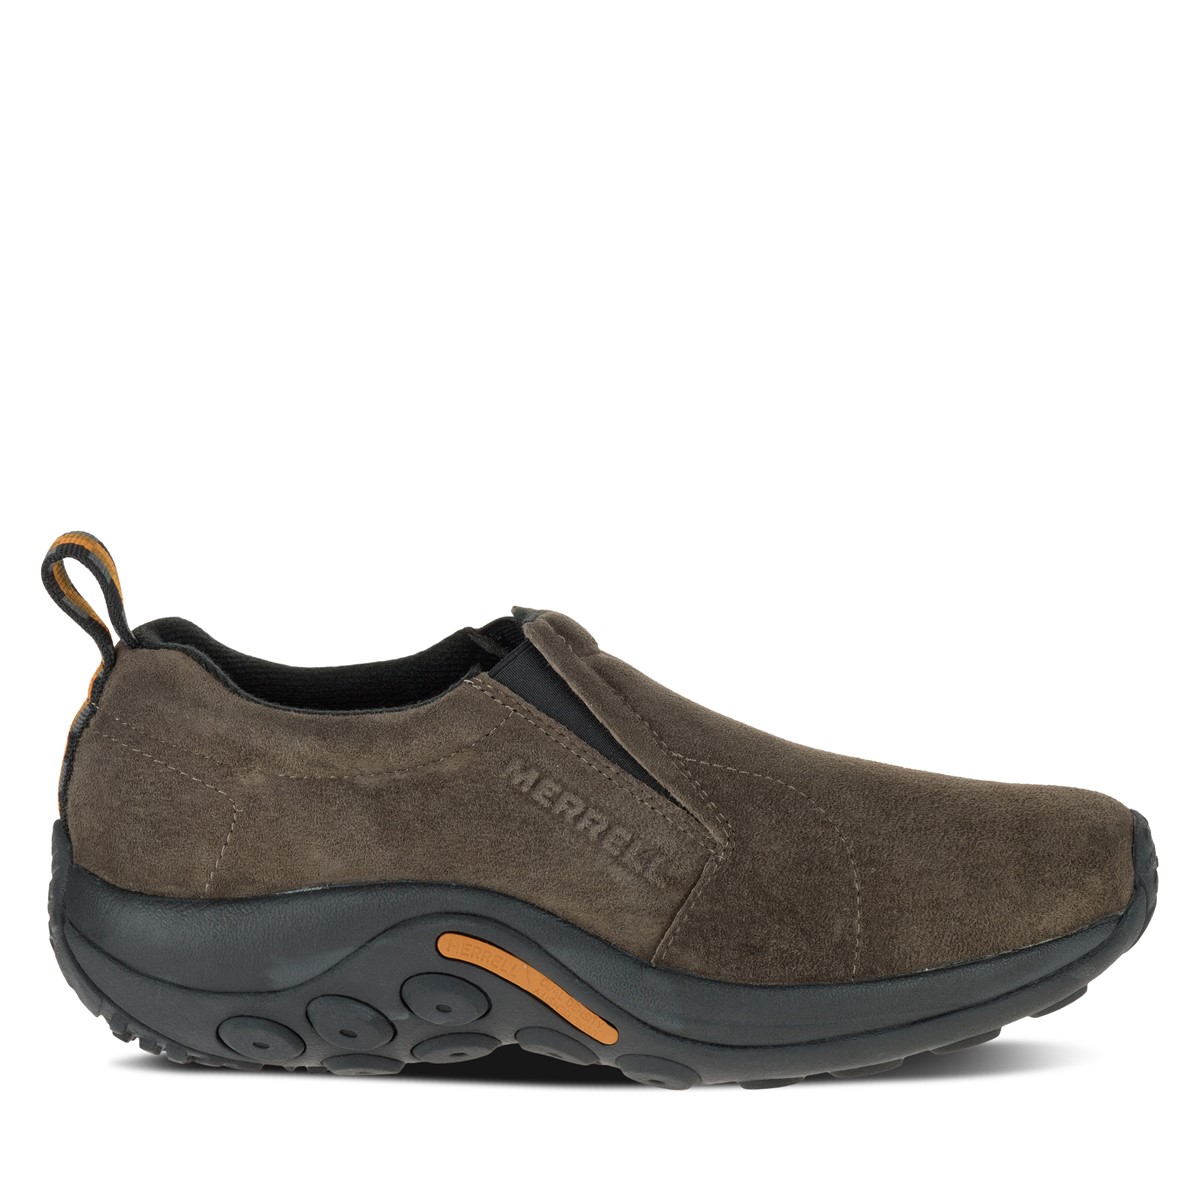 Men's Jungle Moc Slip-On Shoes in Brown